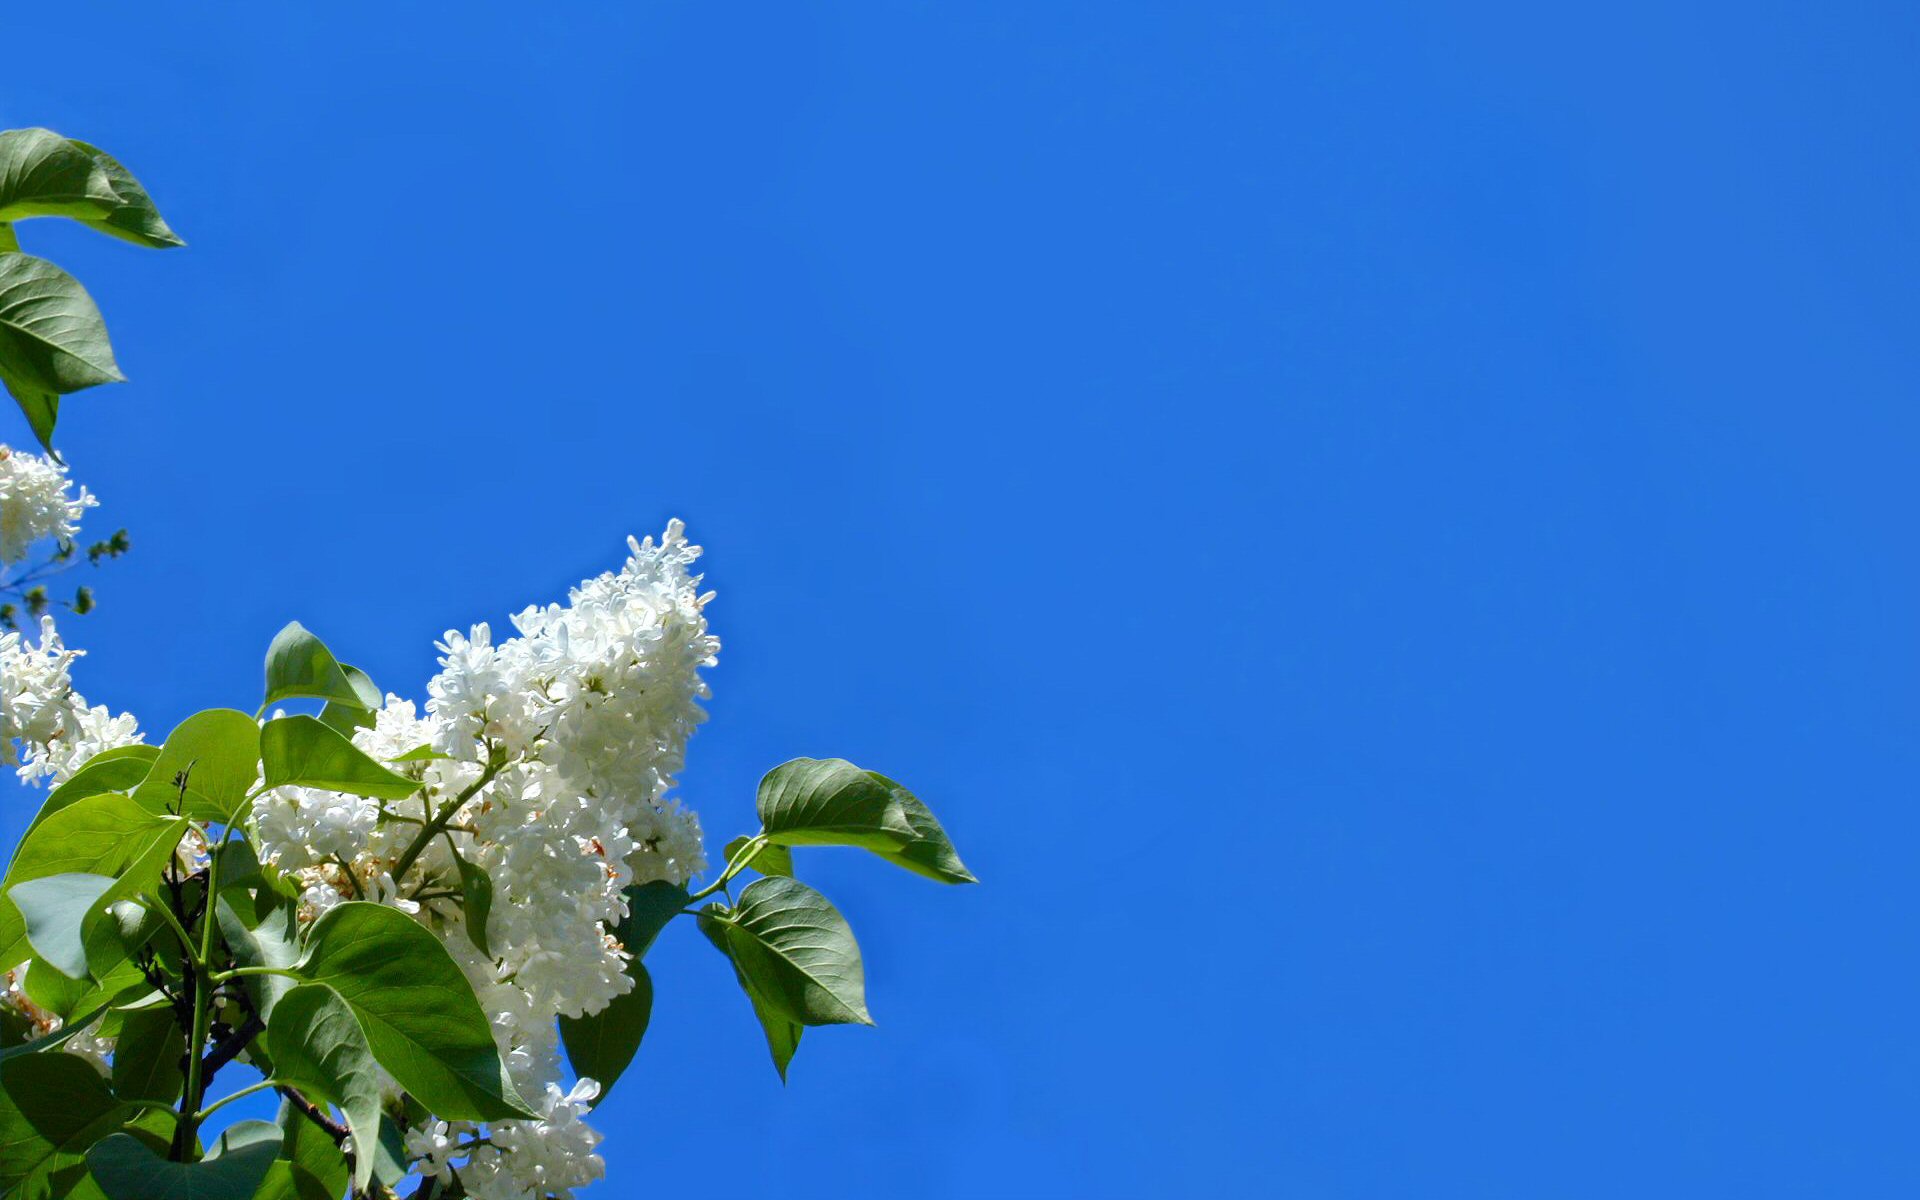 264114 descargar imagen tierra/naturaleza, florecer, azul, flor, verde, hoja, cielo, blanco, flores: fondos de pantalla y protectores de pantalla gratis